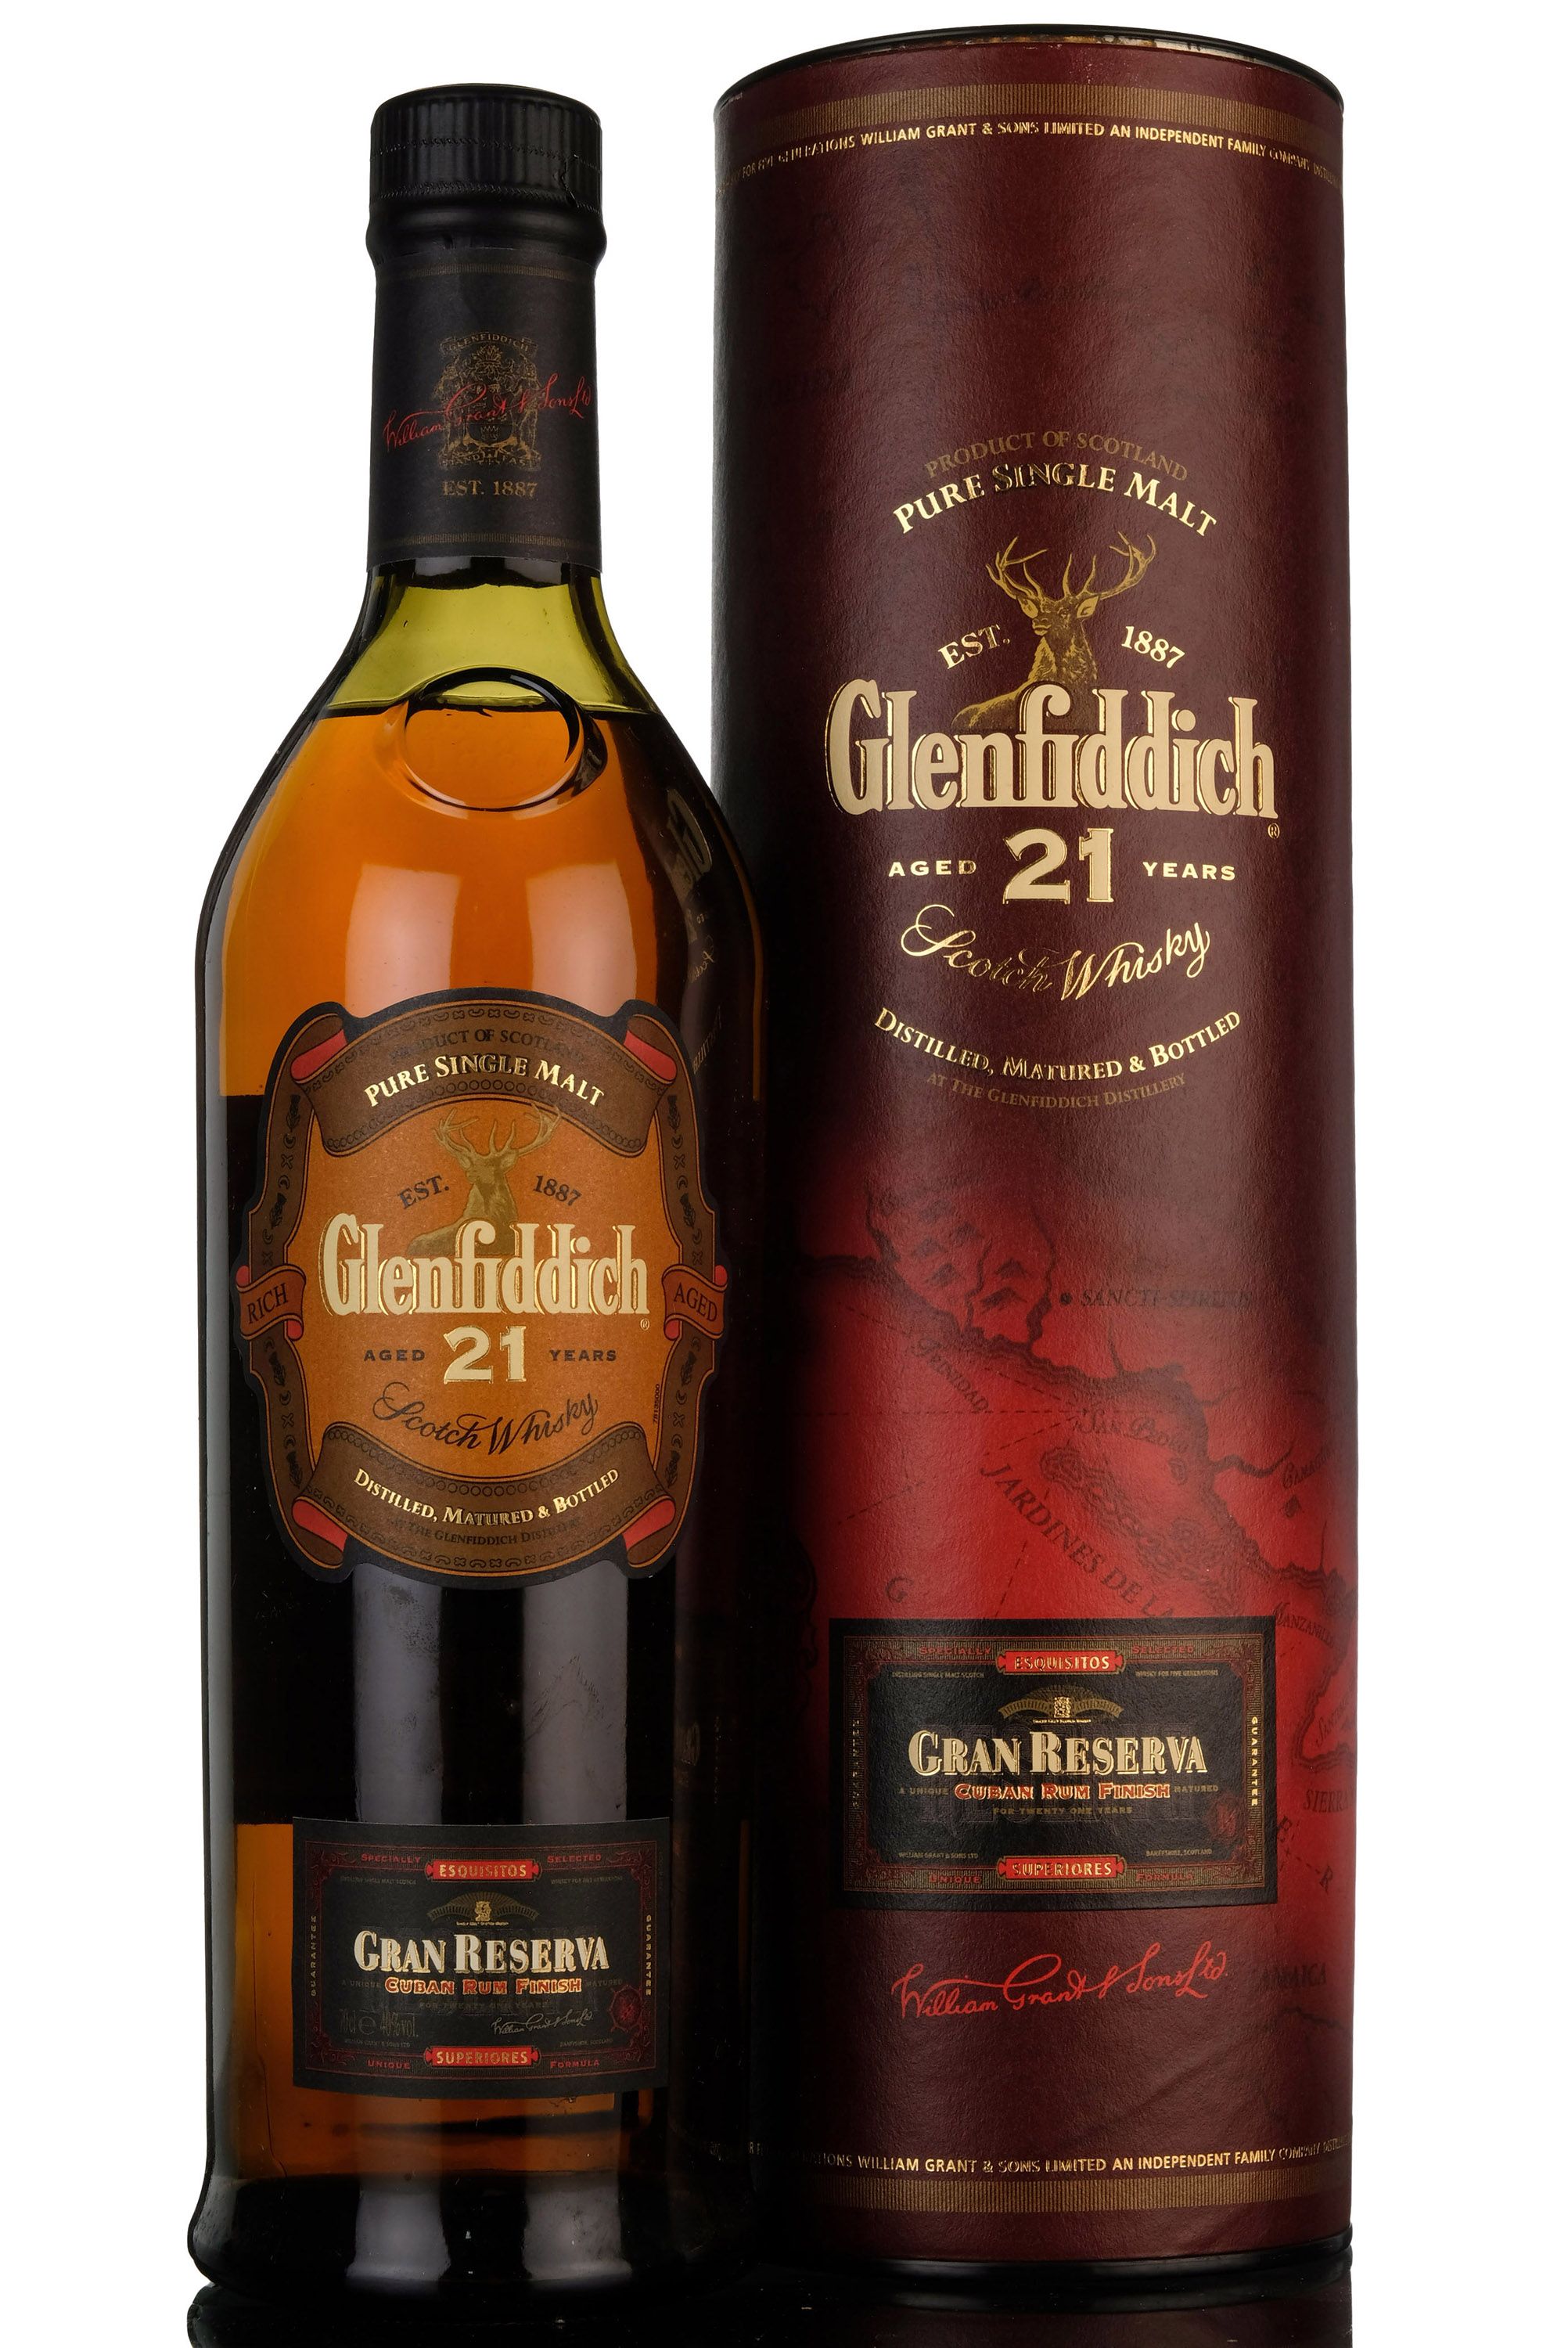 Glenfiddich 21 Year Old - Gran Reserva - 2000s